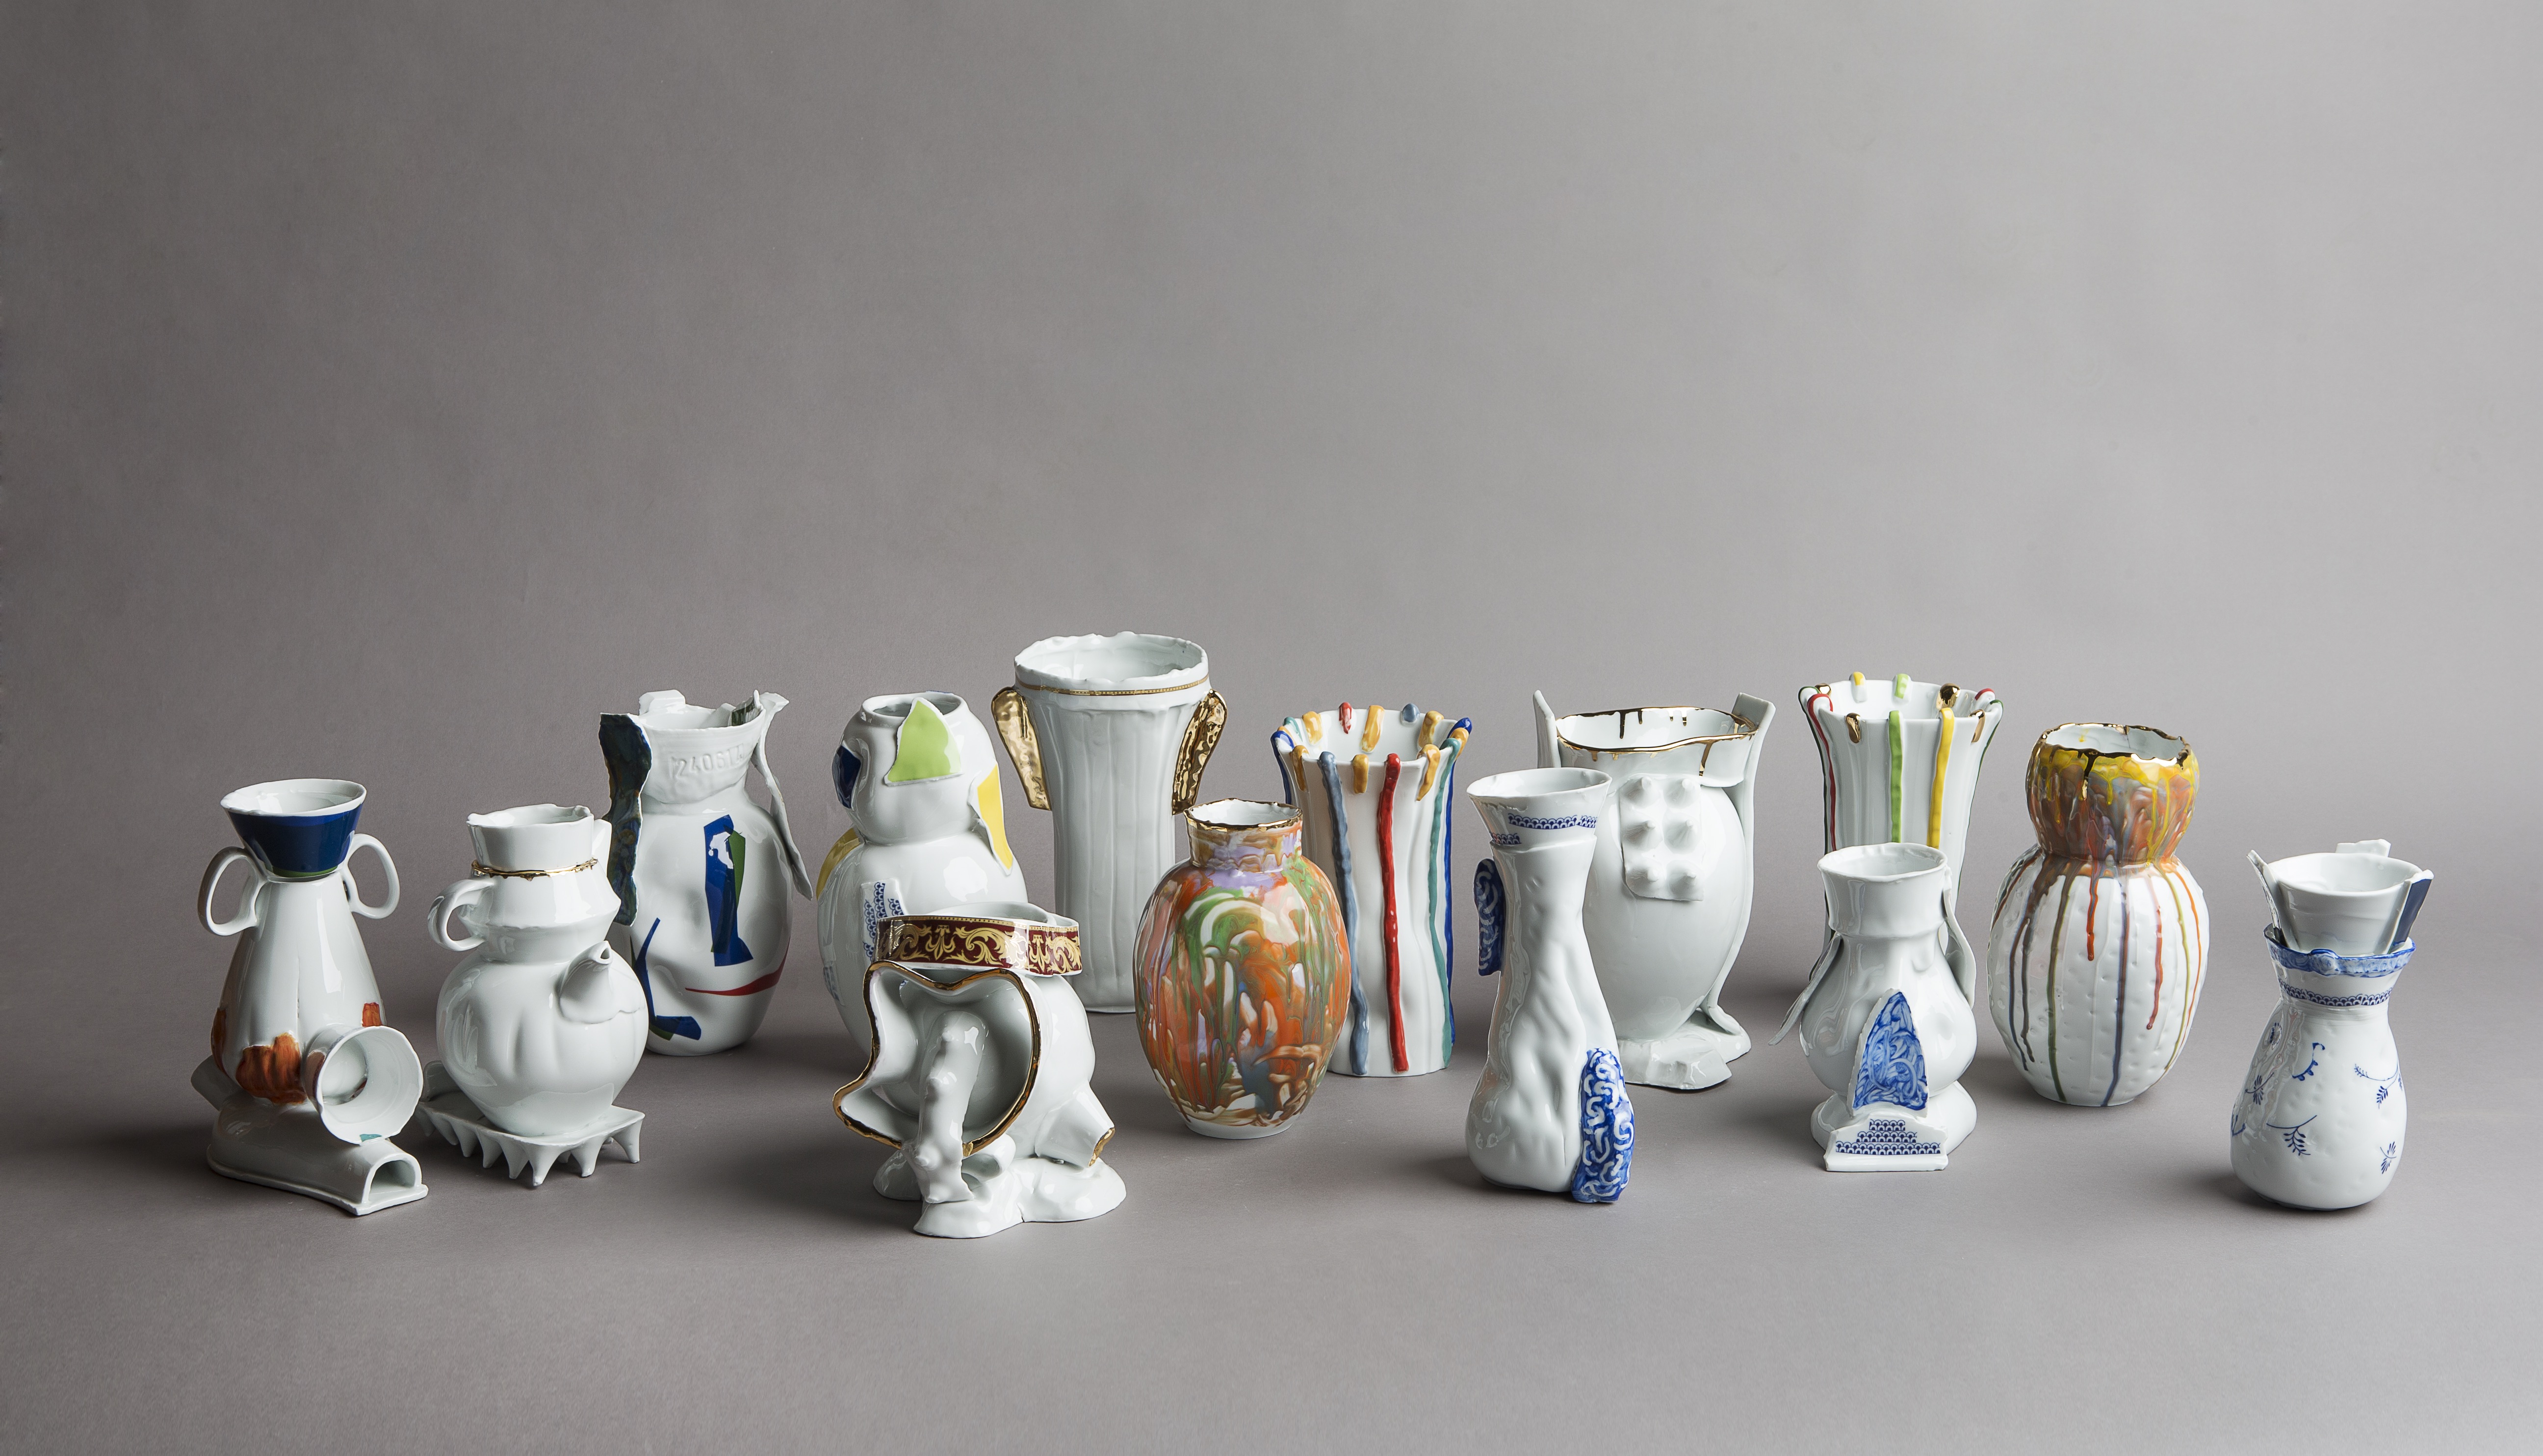  Patrick Loughran, "Vases," 2014. Porcelain. Photo by Guido Werner.